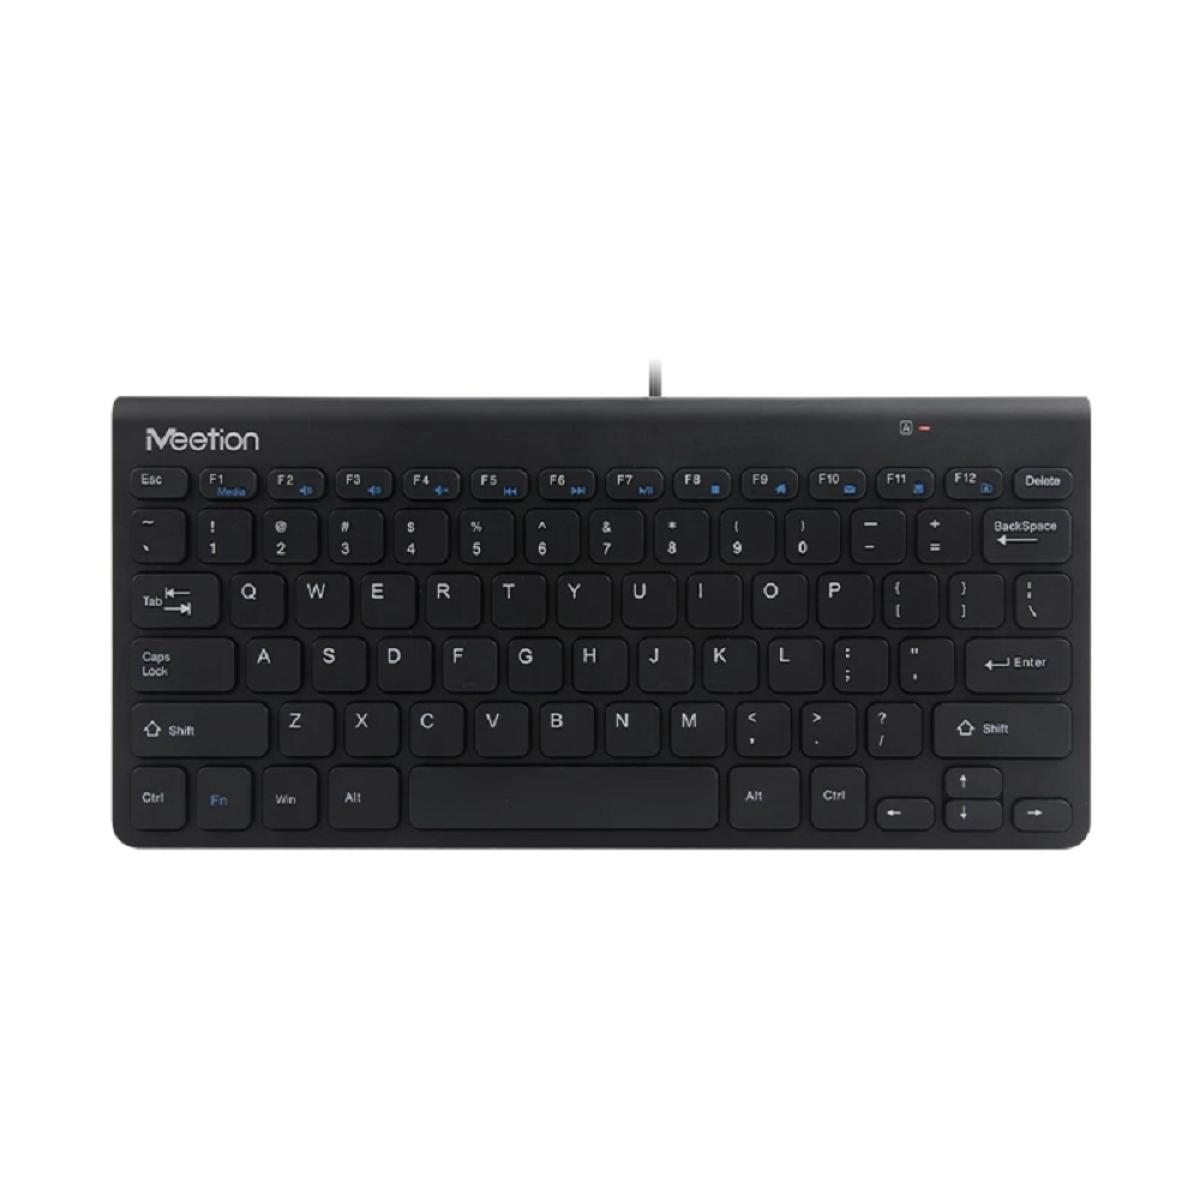 Meetion K400 USB Mini Office Keyboard